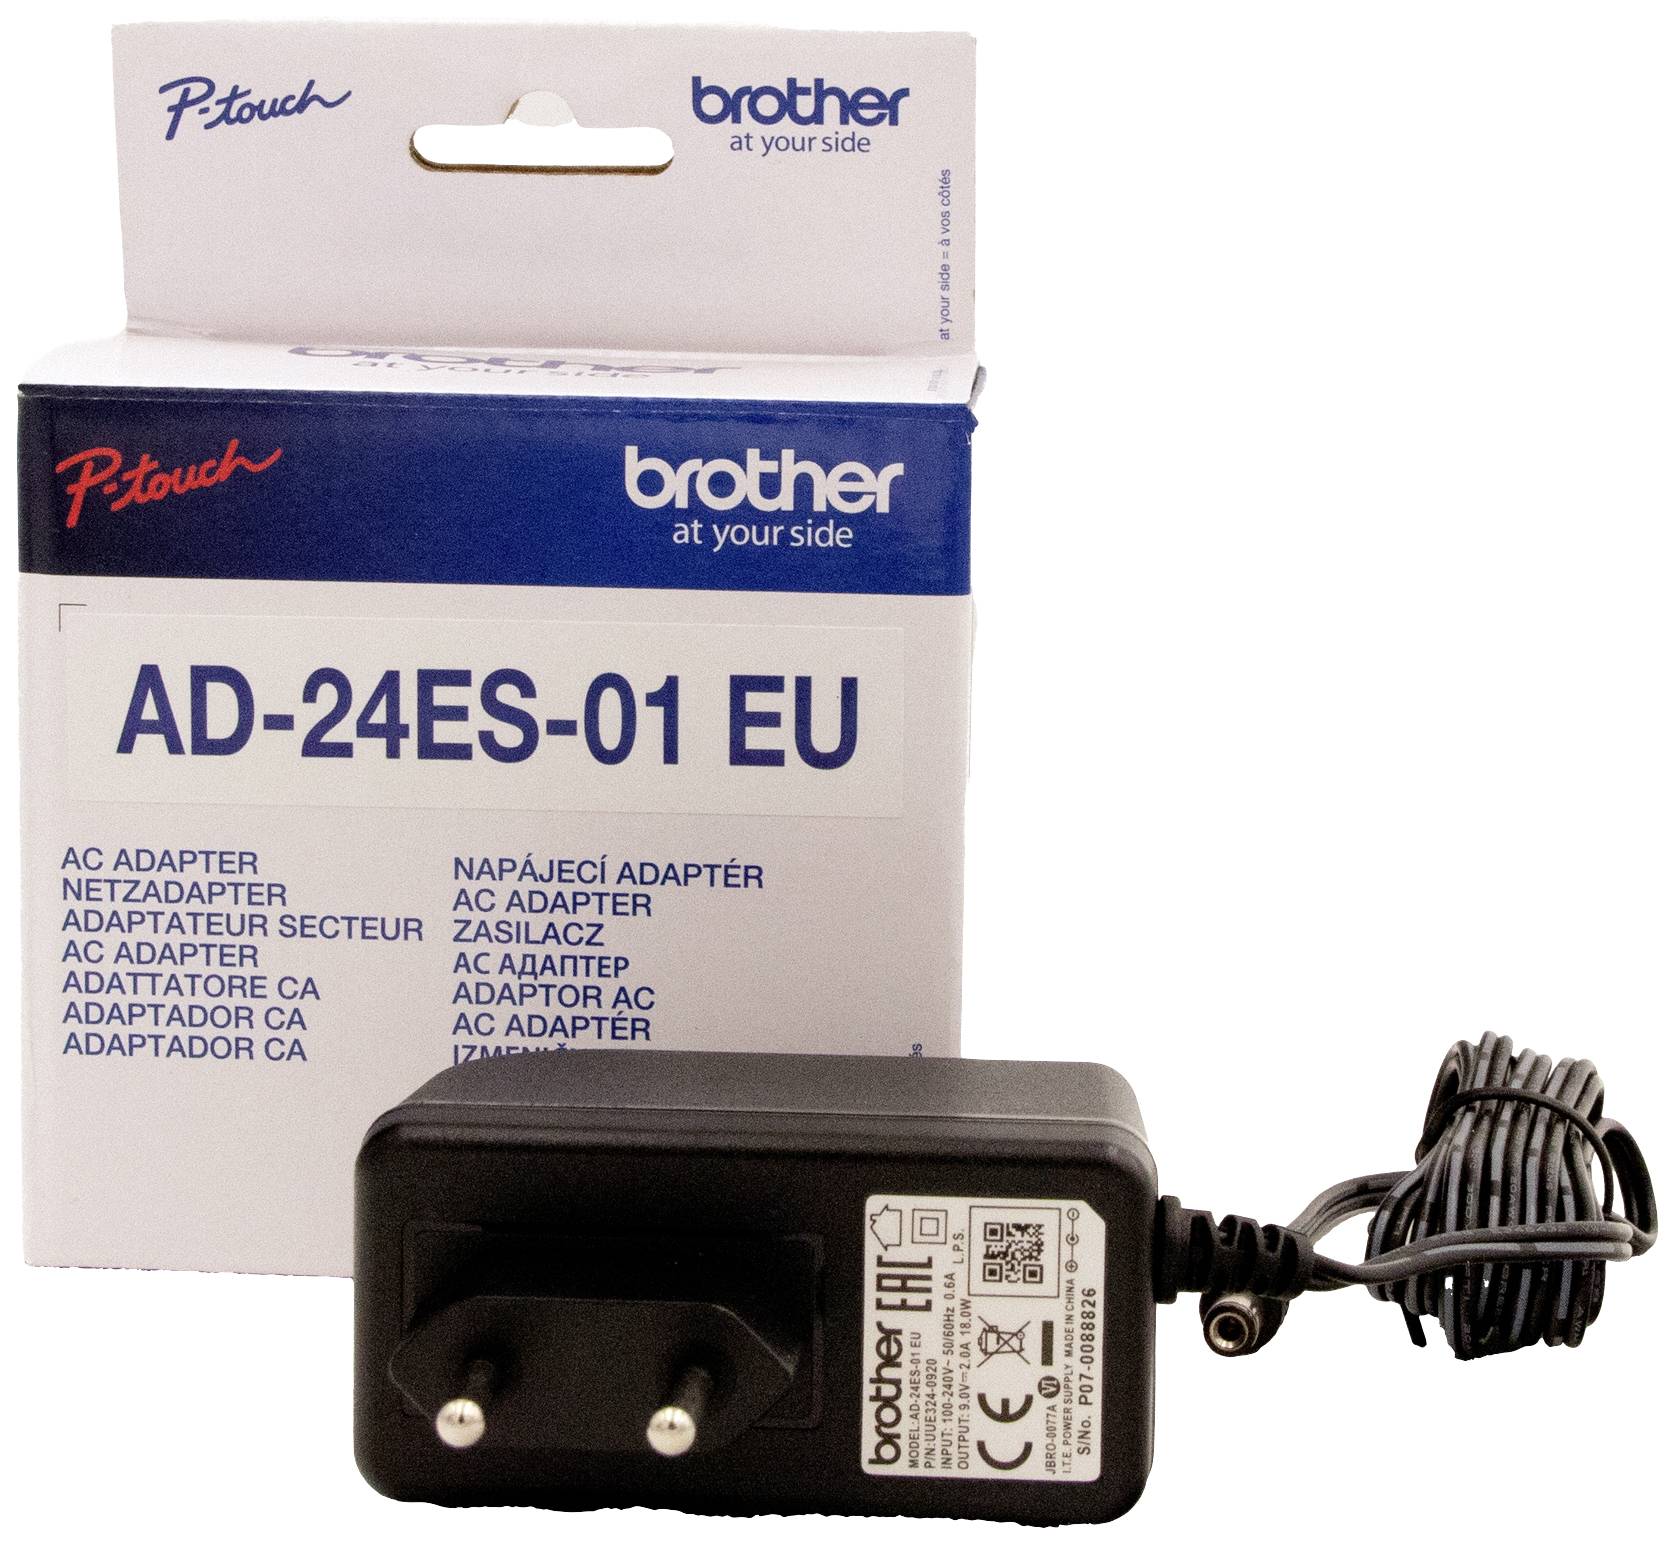 Original Netzteil für BROTHER AD-24ES-EU Original